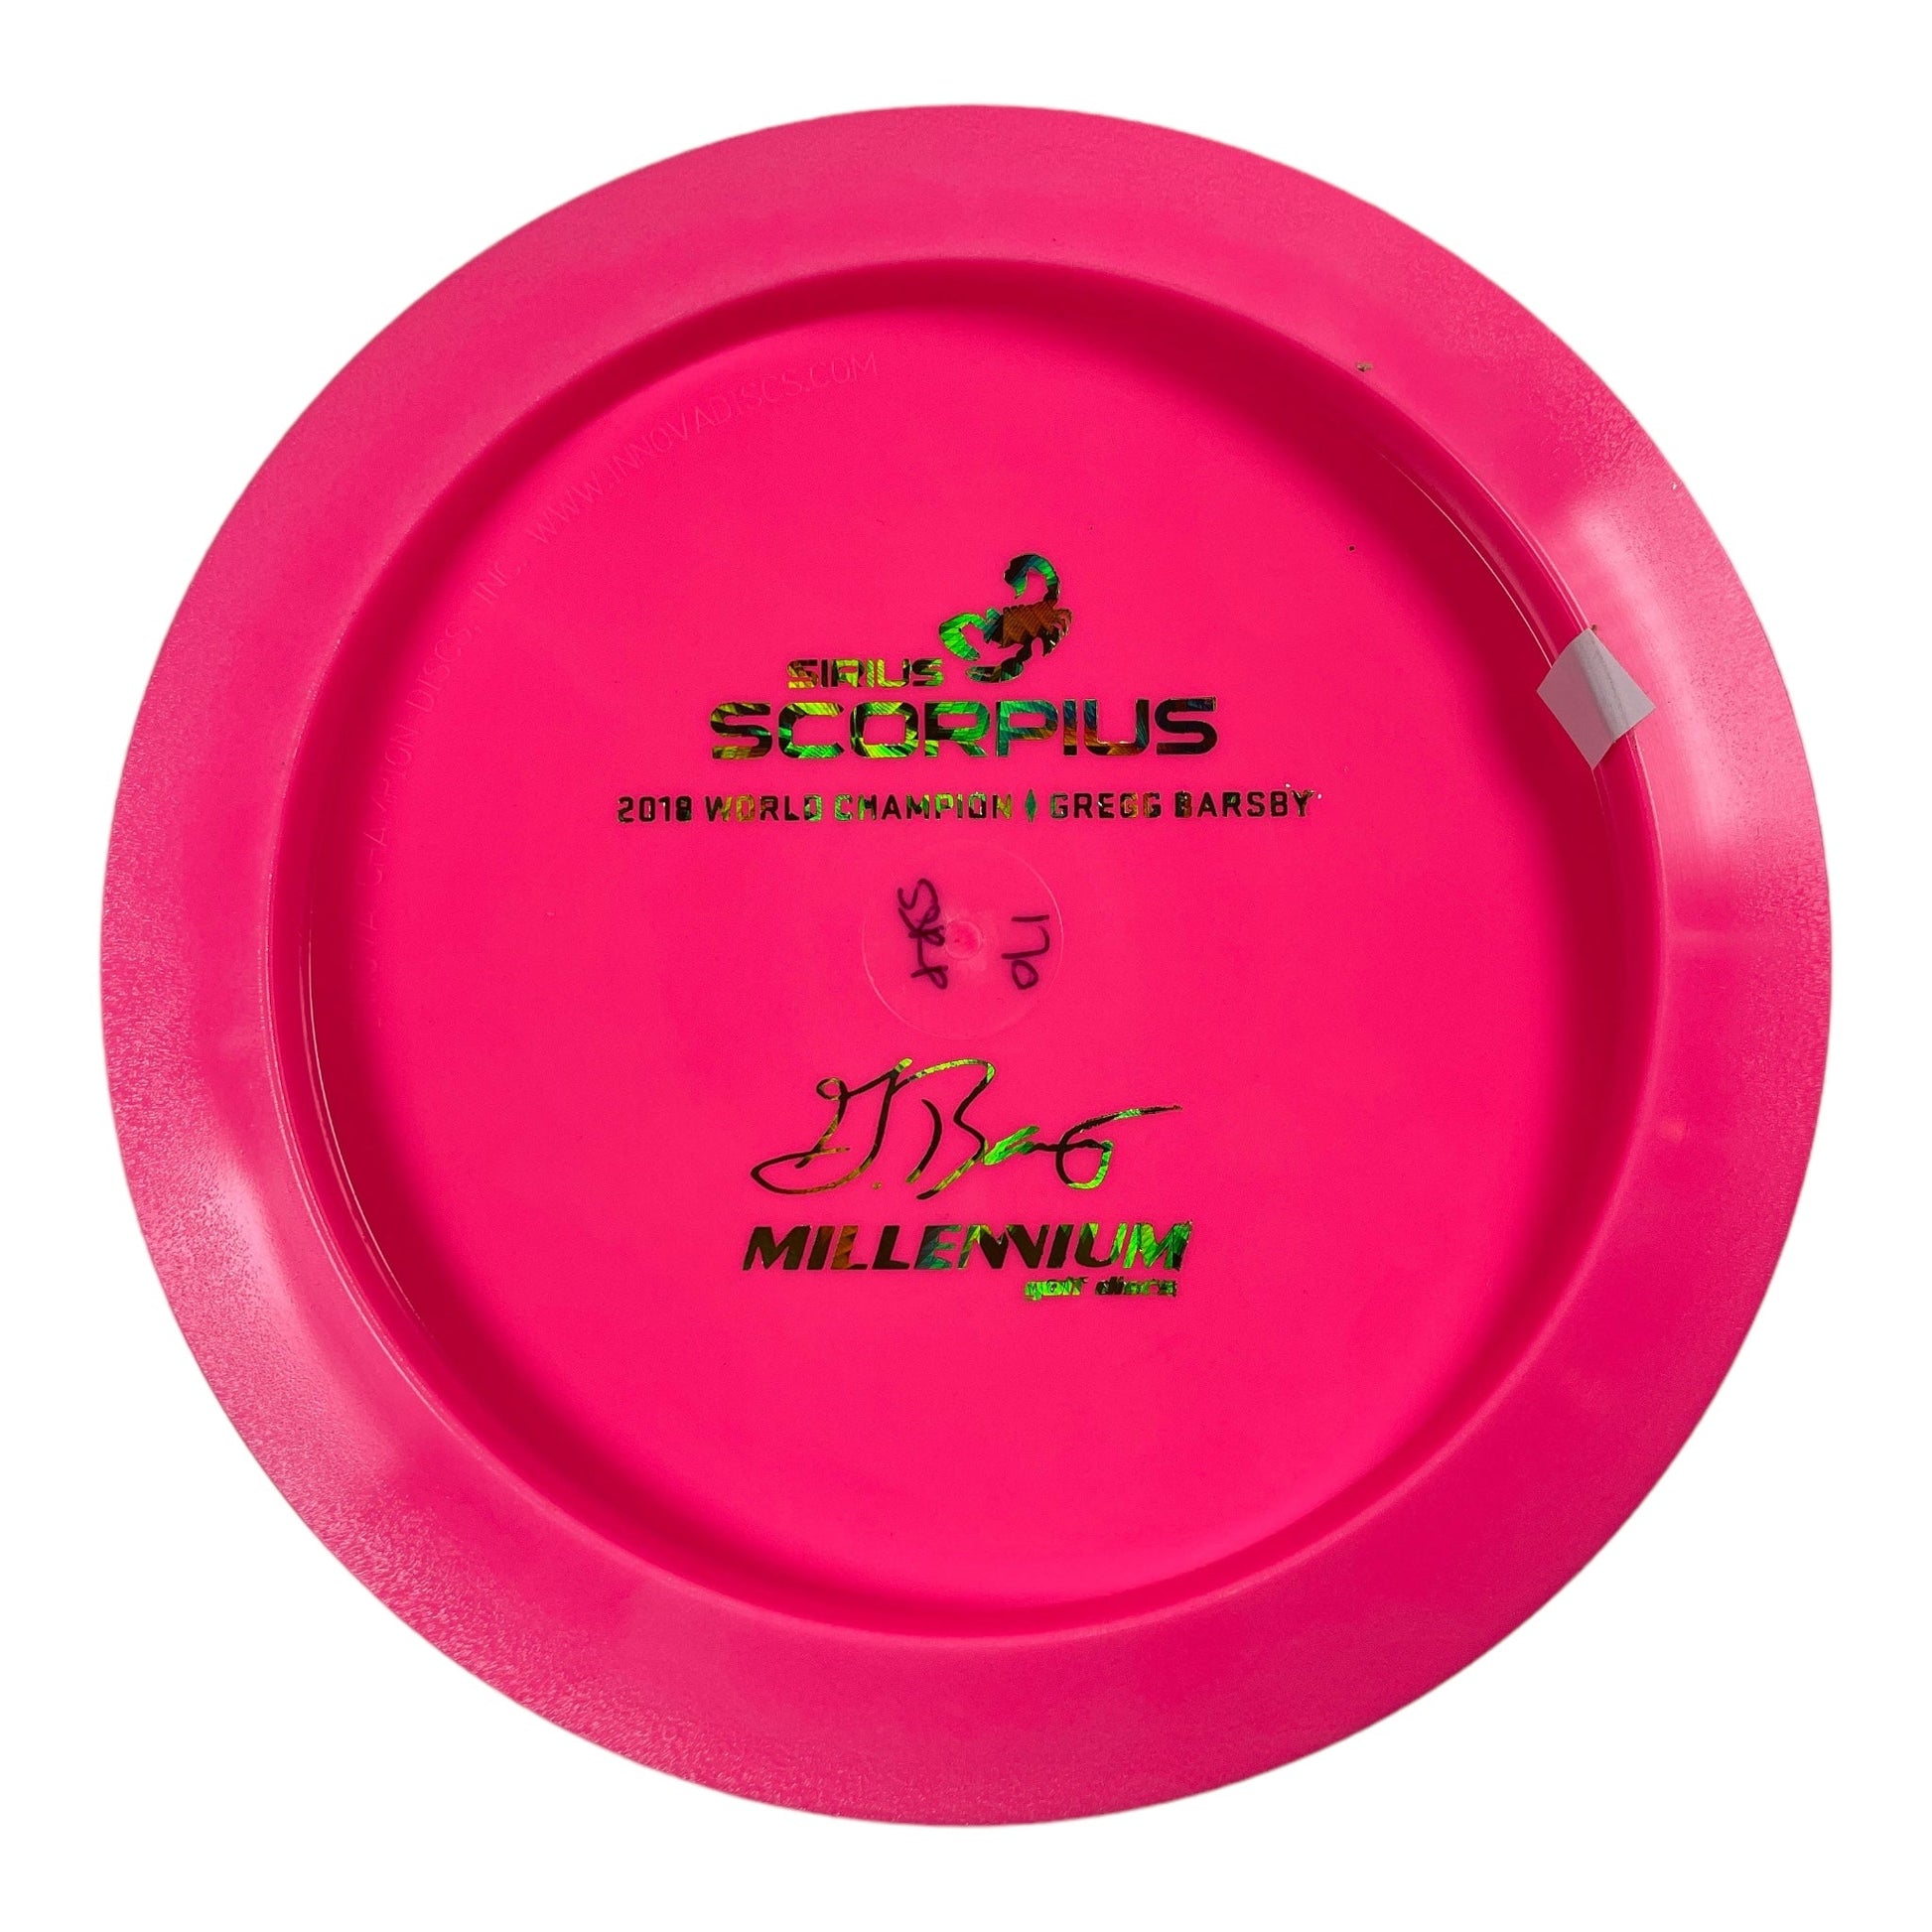 Millennium Golf Discs Scorpius | Sirius | Pink/Green 170g (Gregg Barsby) Disc Golf